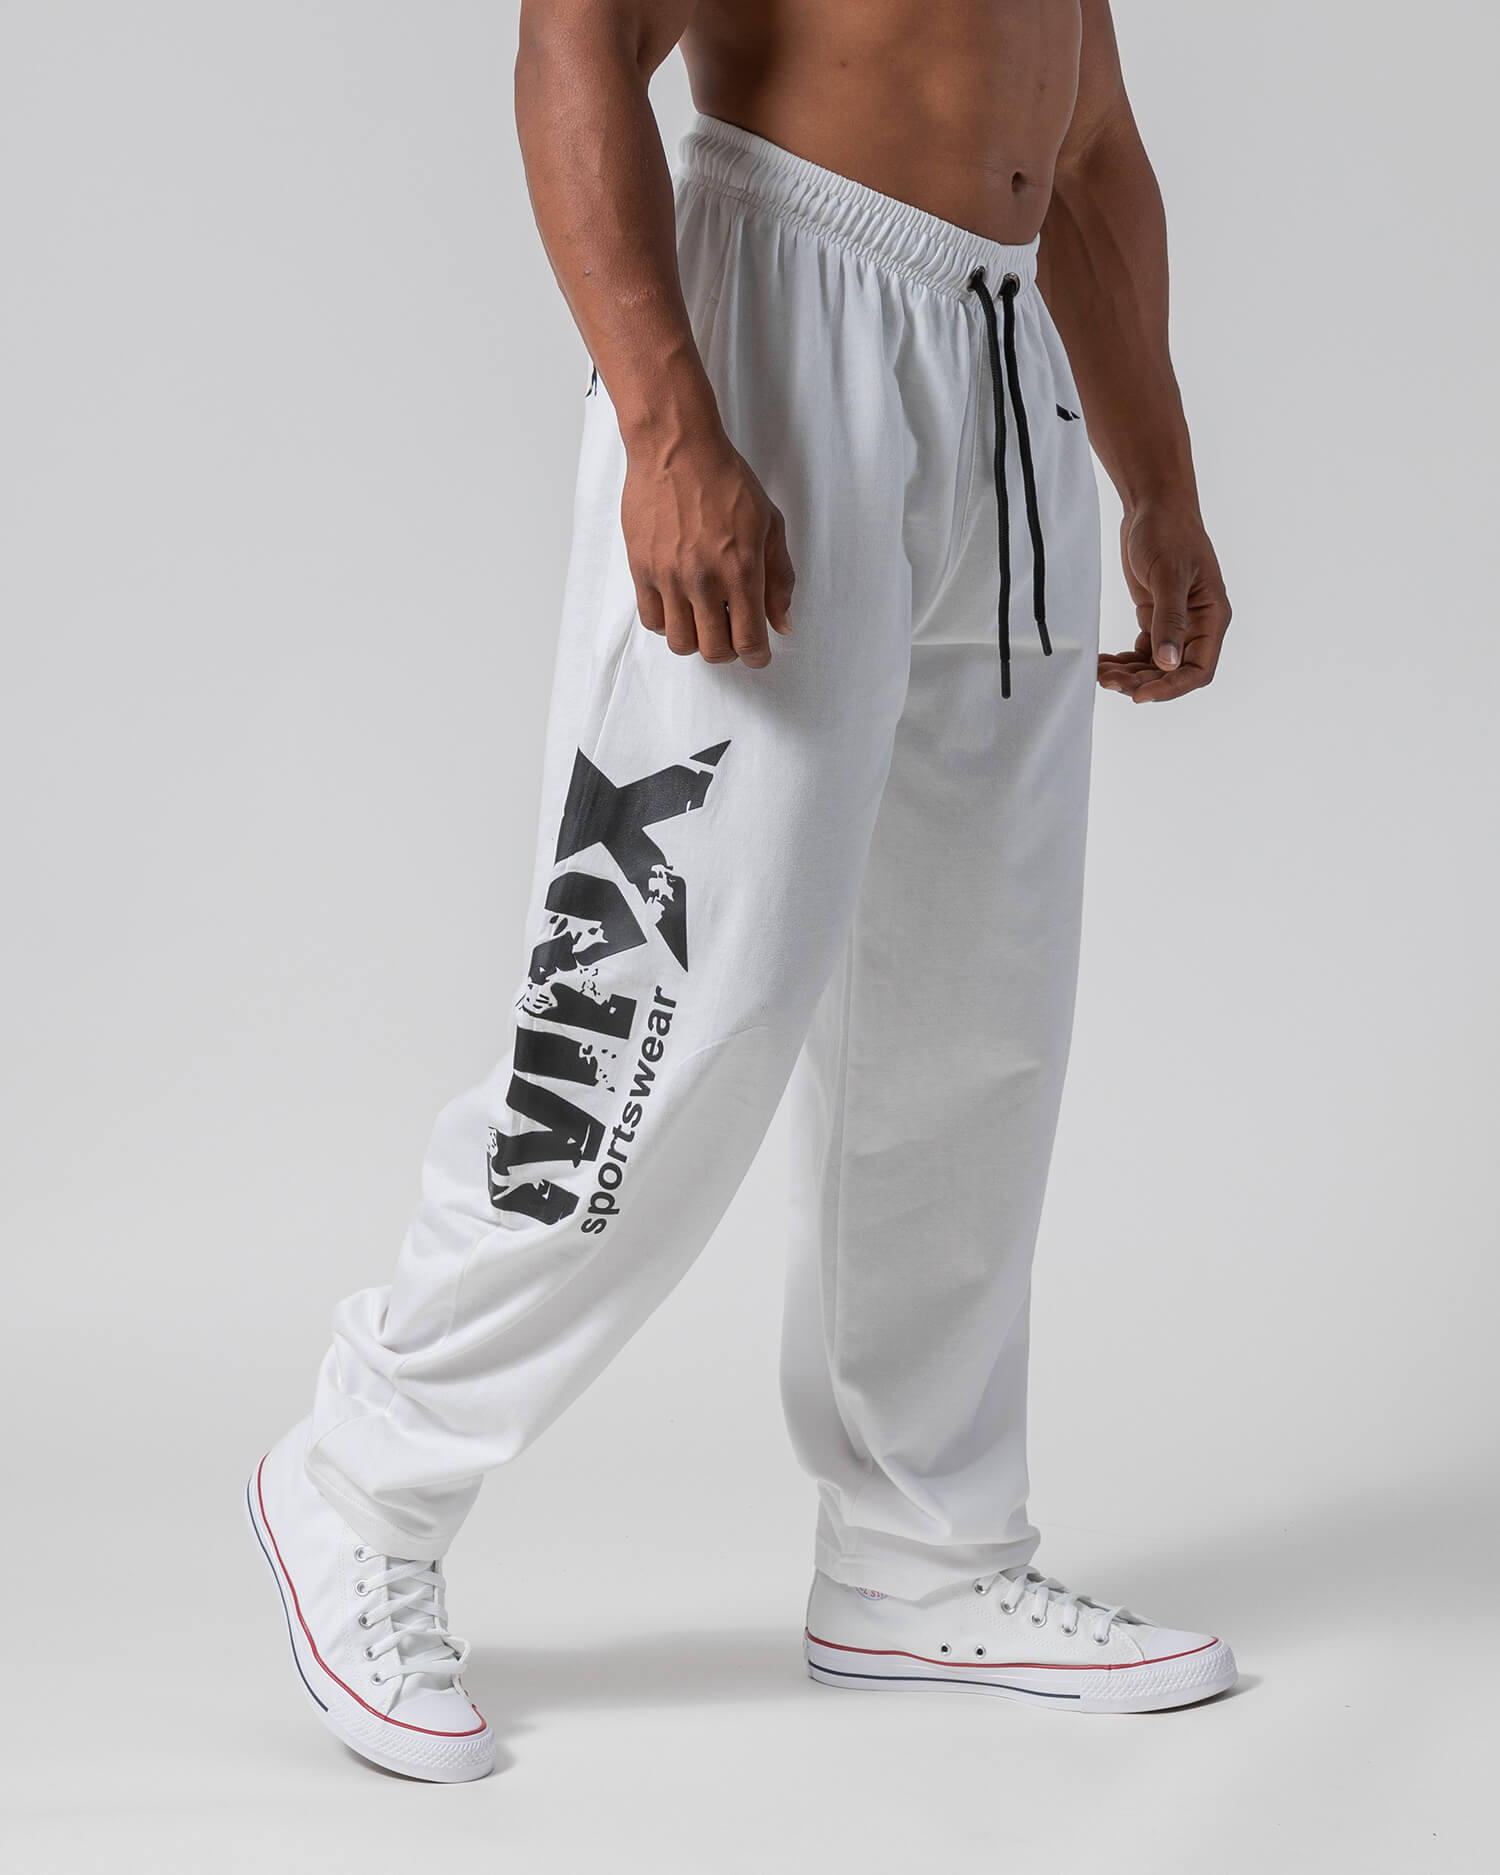 MNX Bodybuilding Classic Pants, white